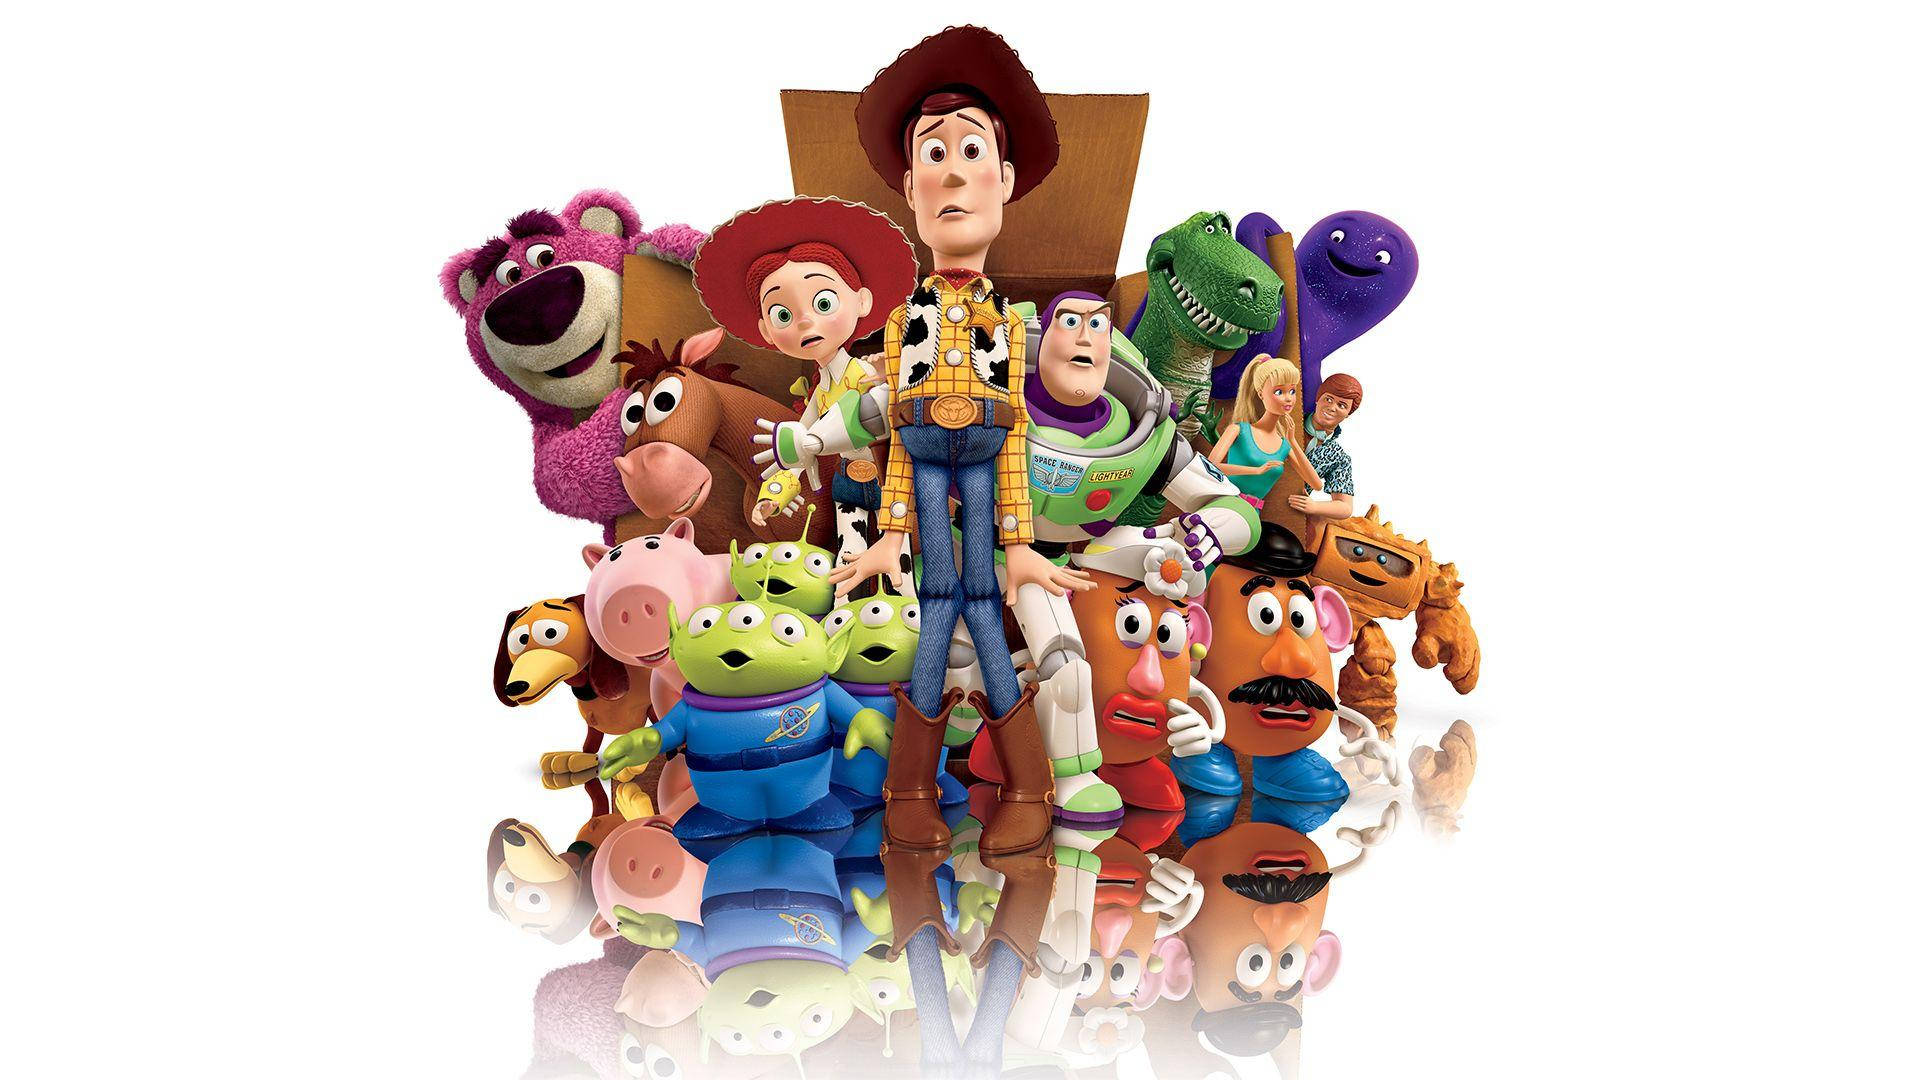 Tapet med Toy Story 3 chokkeret udtryk Wallpaper